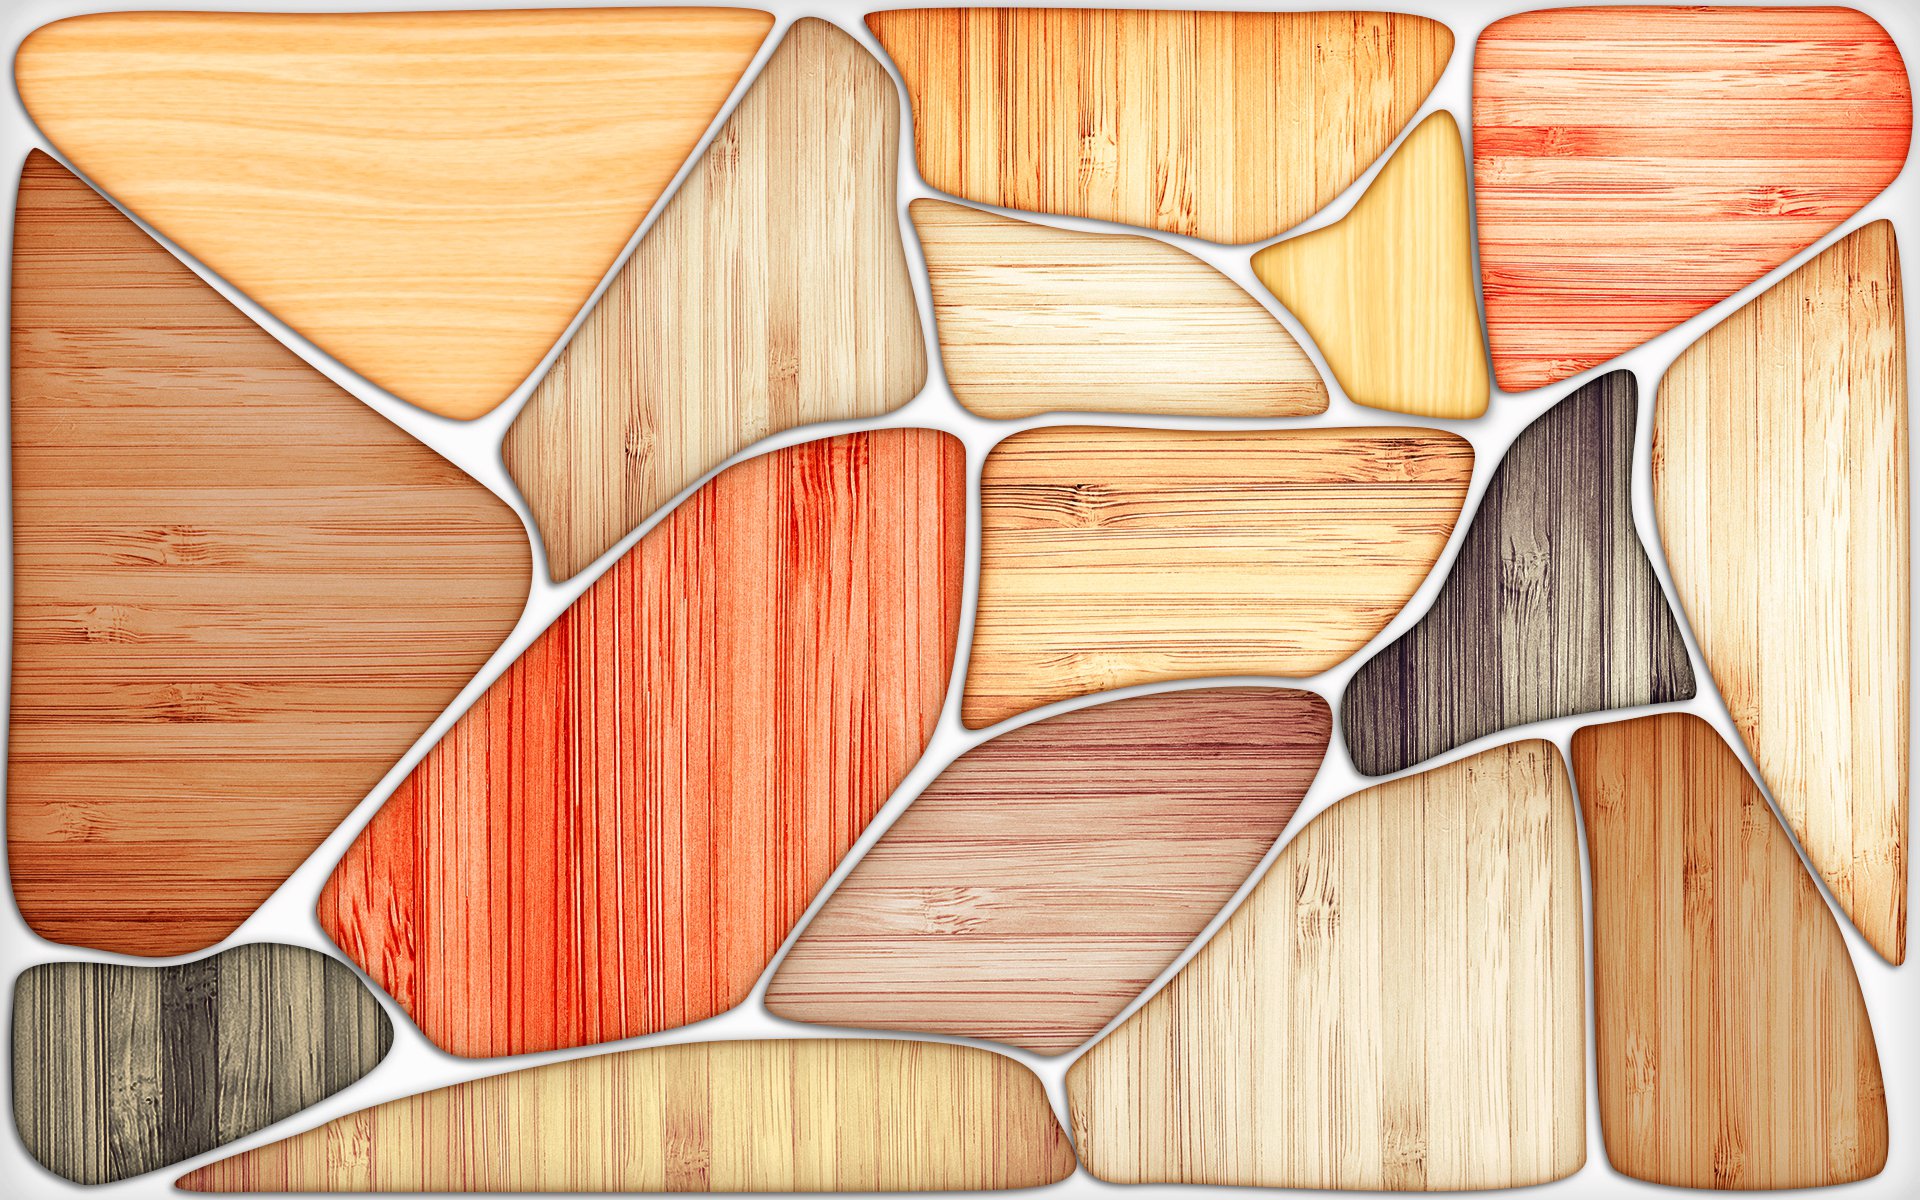 Wooden patterns. Деревянный фон. Деревянные доски текстура. Фон дерево текстура. Текстура деревянной обшивки.